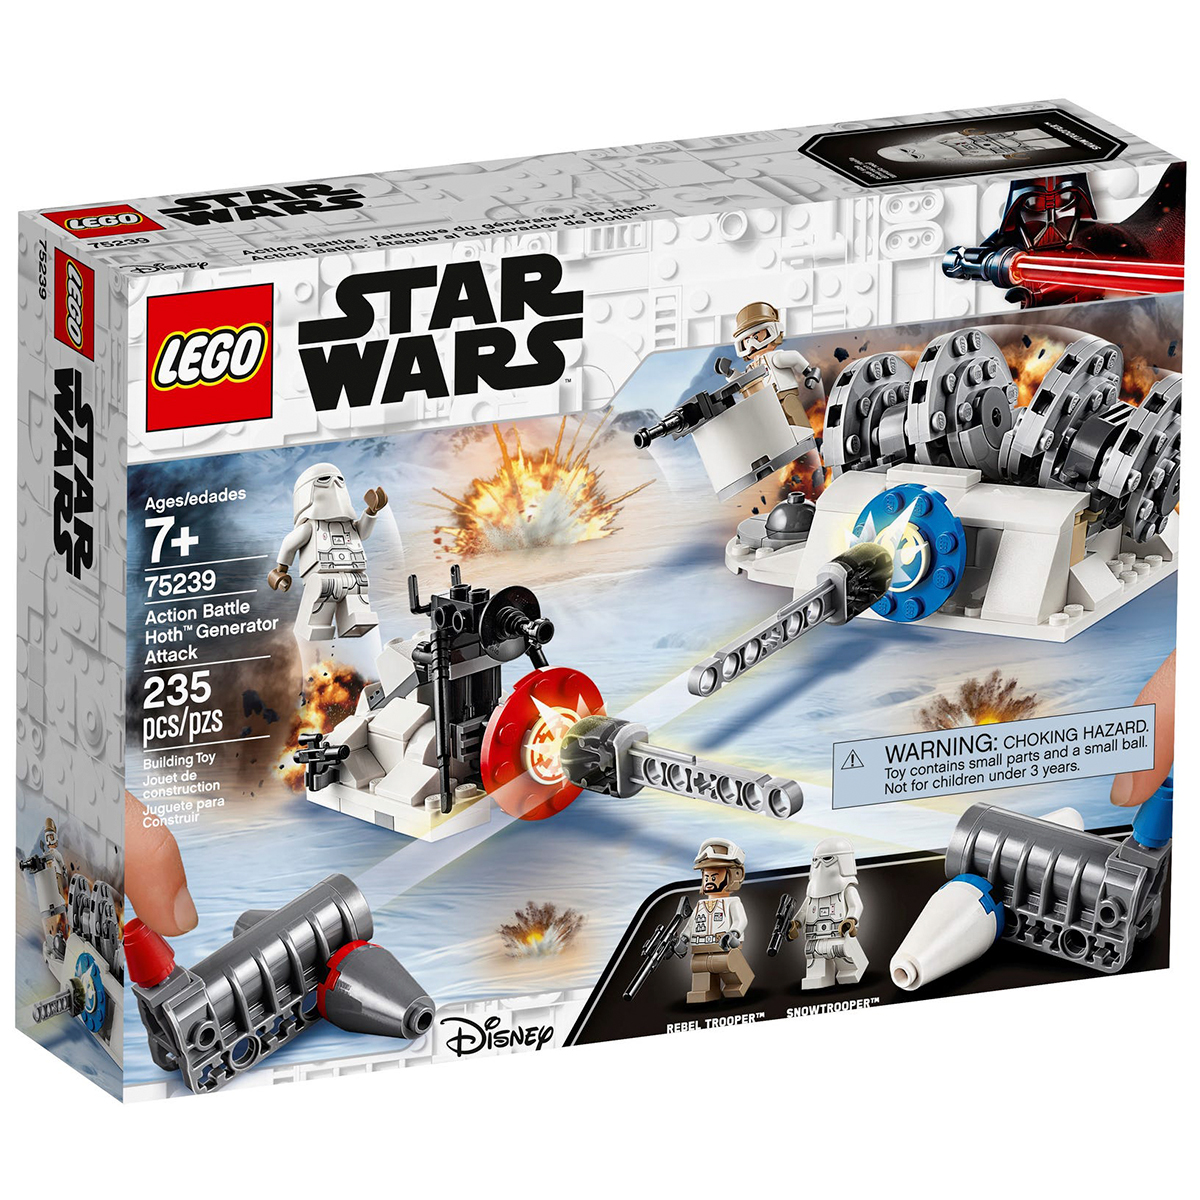 LEGO Star Wars - Batalha de Hoth: Ataque ao Gerador - 75239